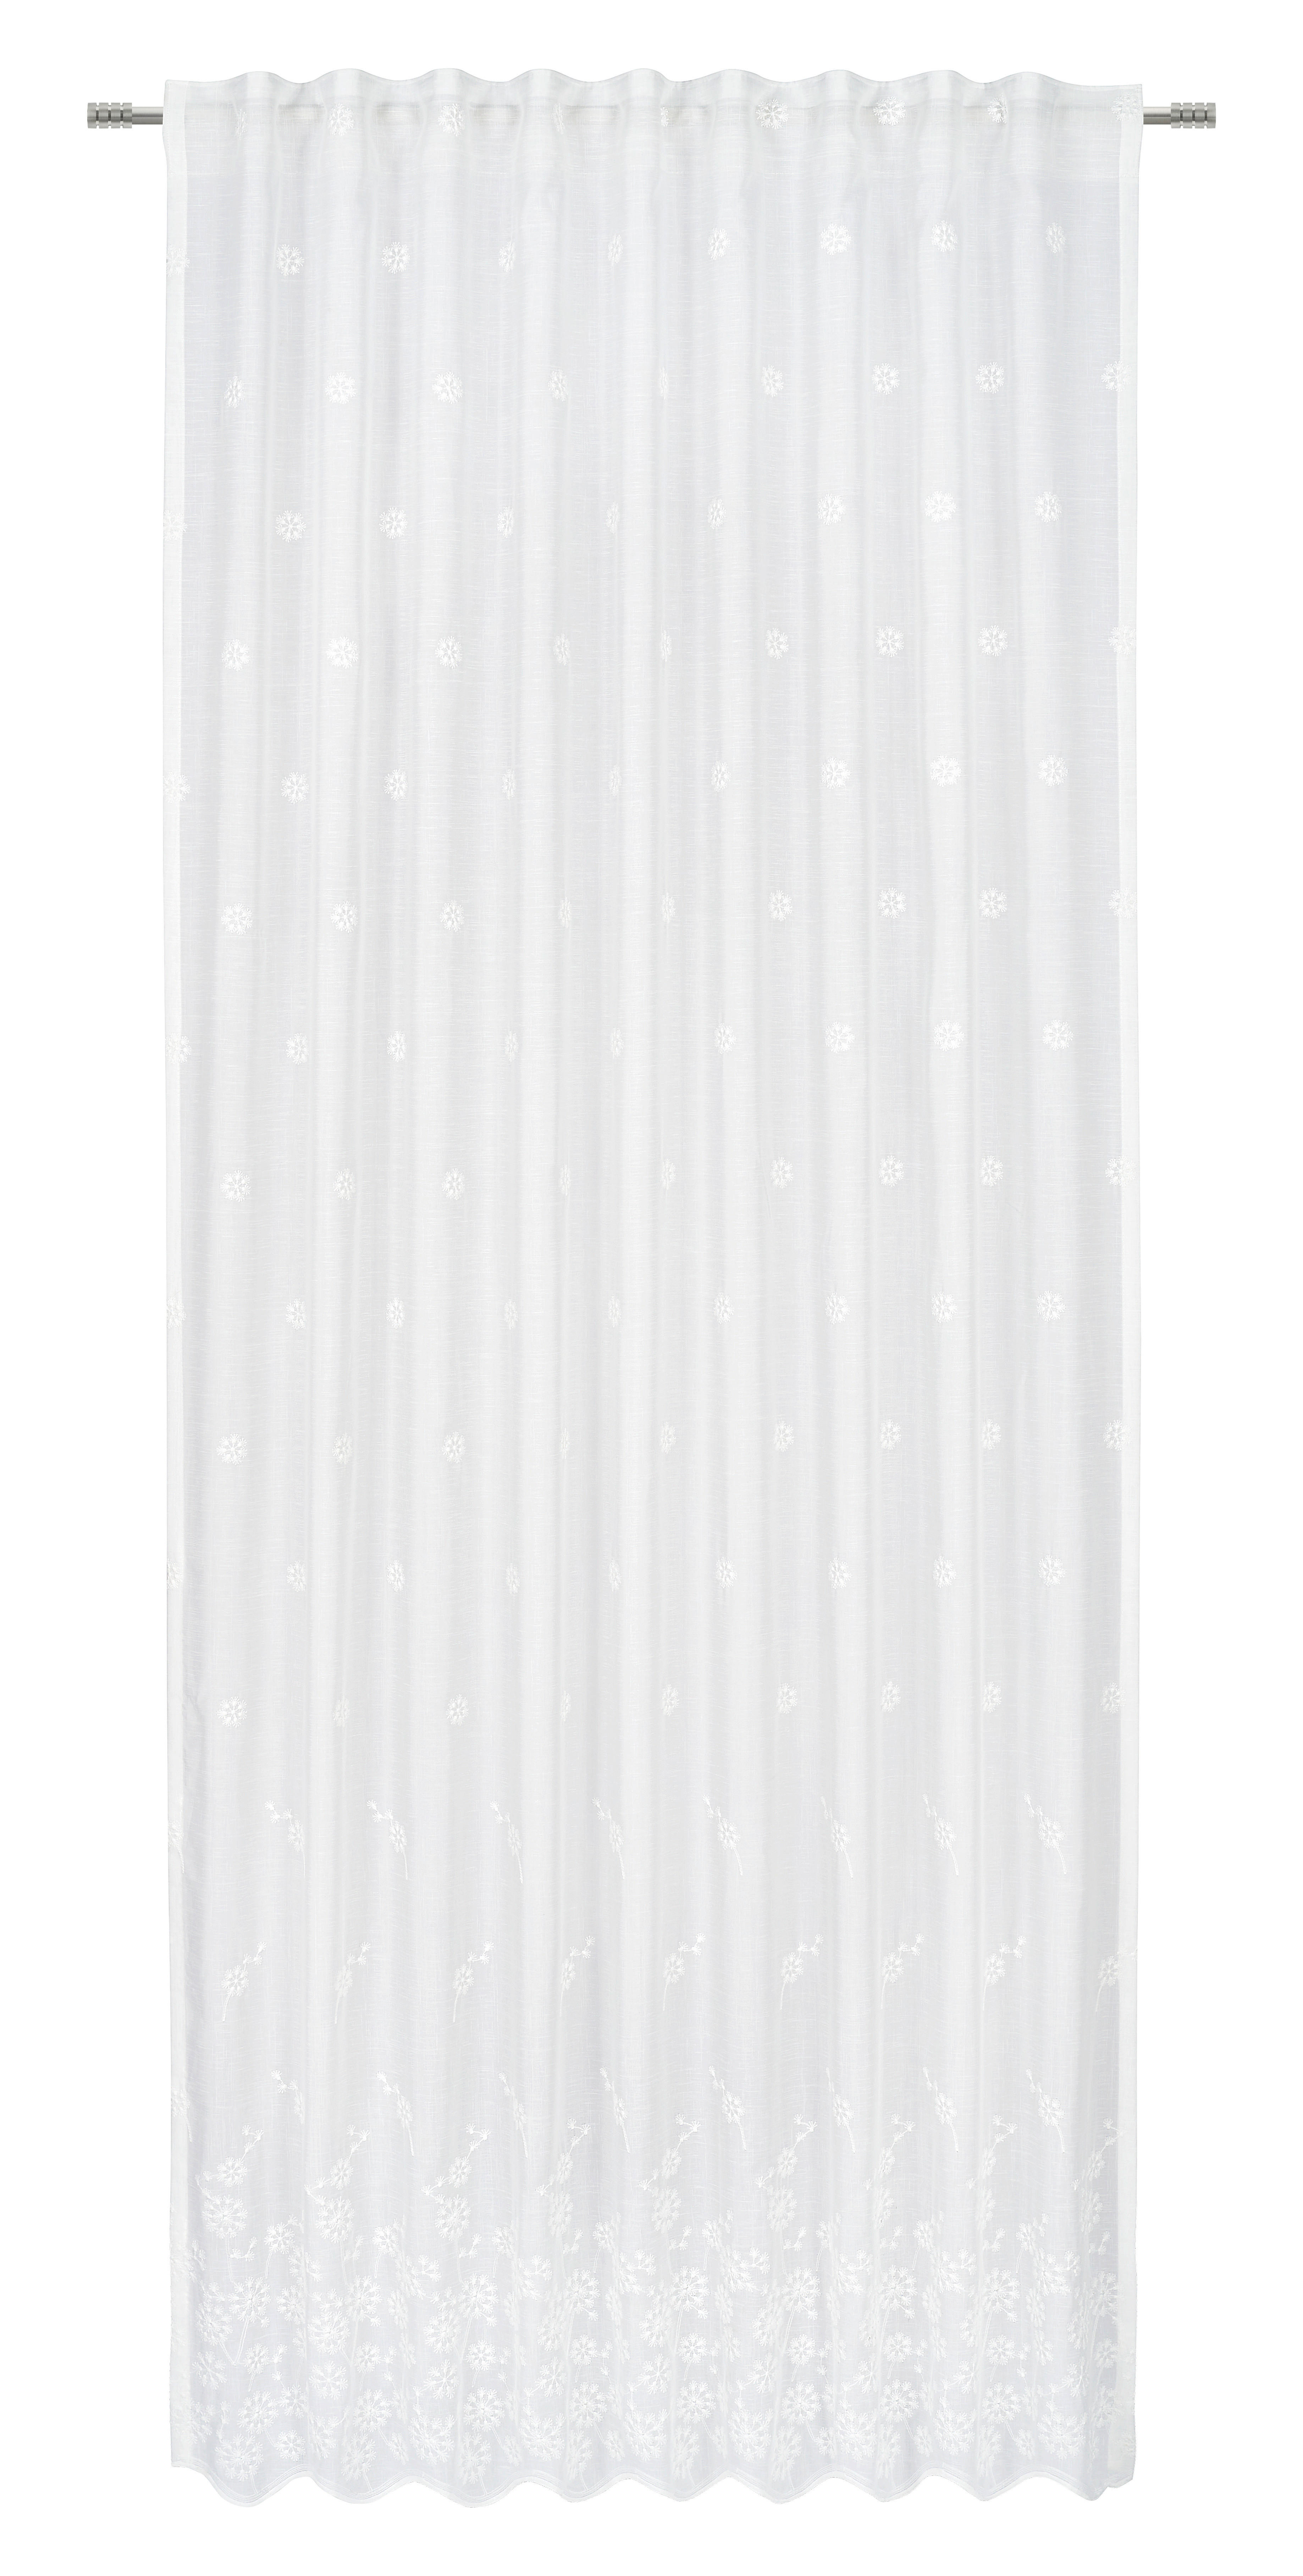 FERTIGVORHANG DAMARO halbtransparent 140/245 cm   - Ecru, KONVENTIONELL, Textil (140/245cm) - Esposa